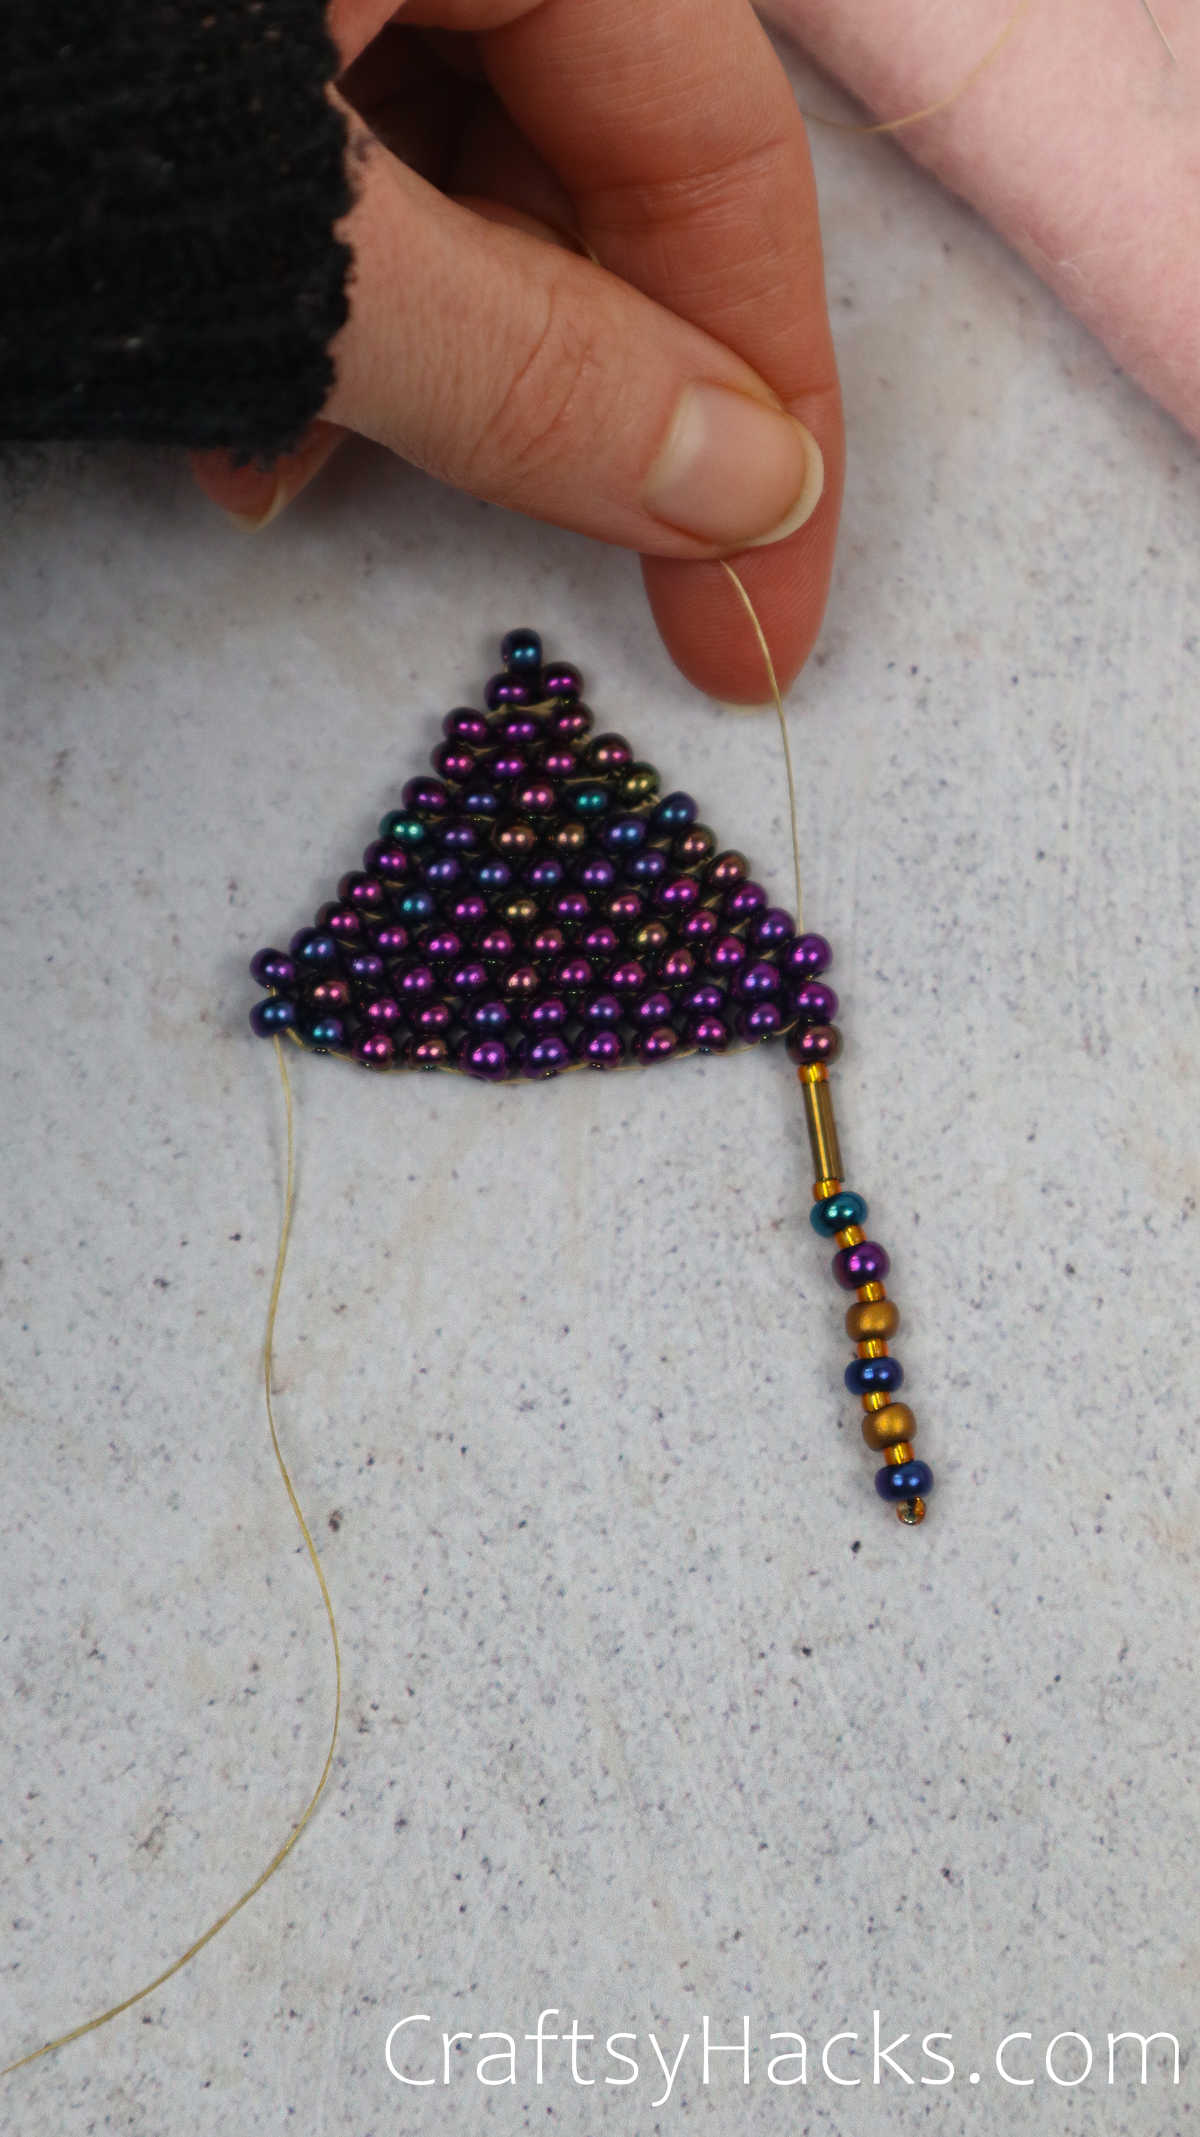 threading through the beads